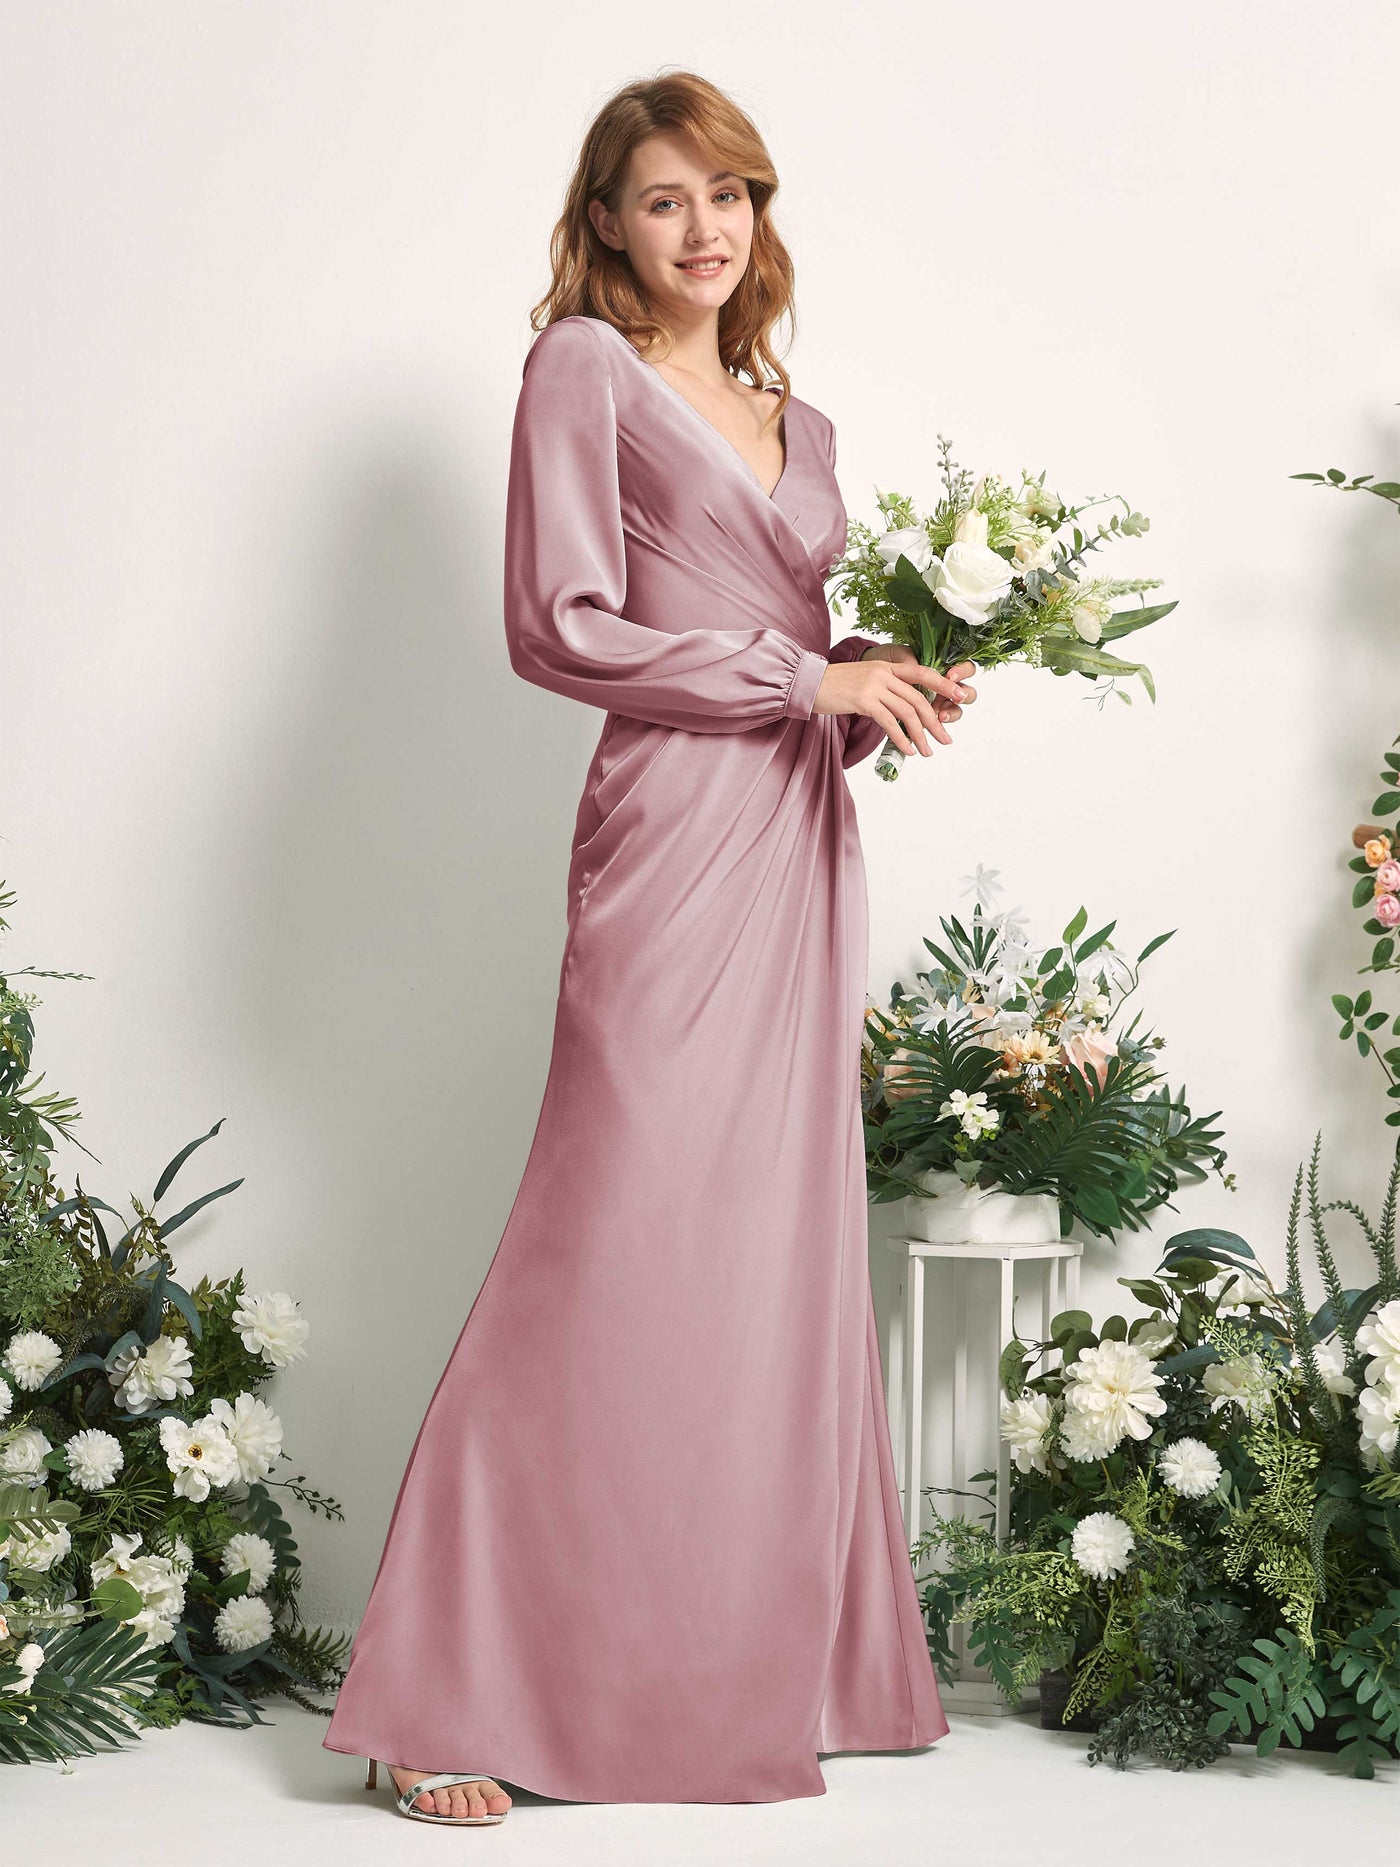 Rose Quartz Bridesmaid Dresses Bridesmaid Dress Ball Gown Satin V-neck Full Length Long Sleeves Wedding Party Dress (80225166)#color_rose-quartz